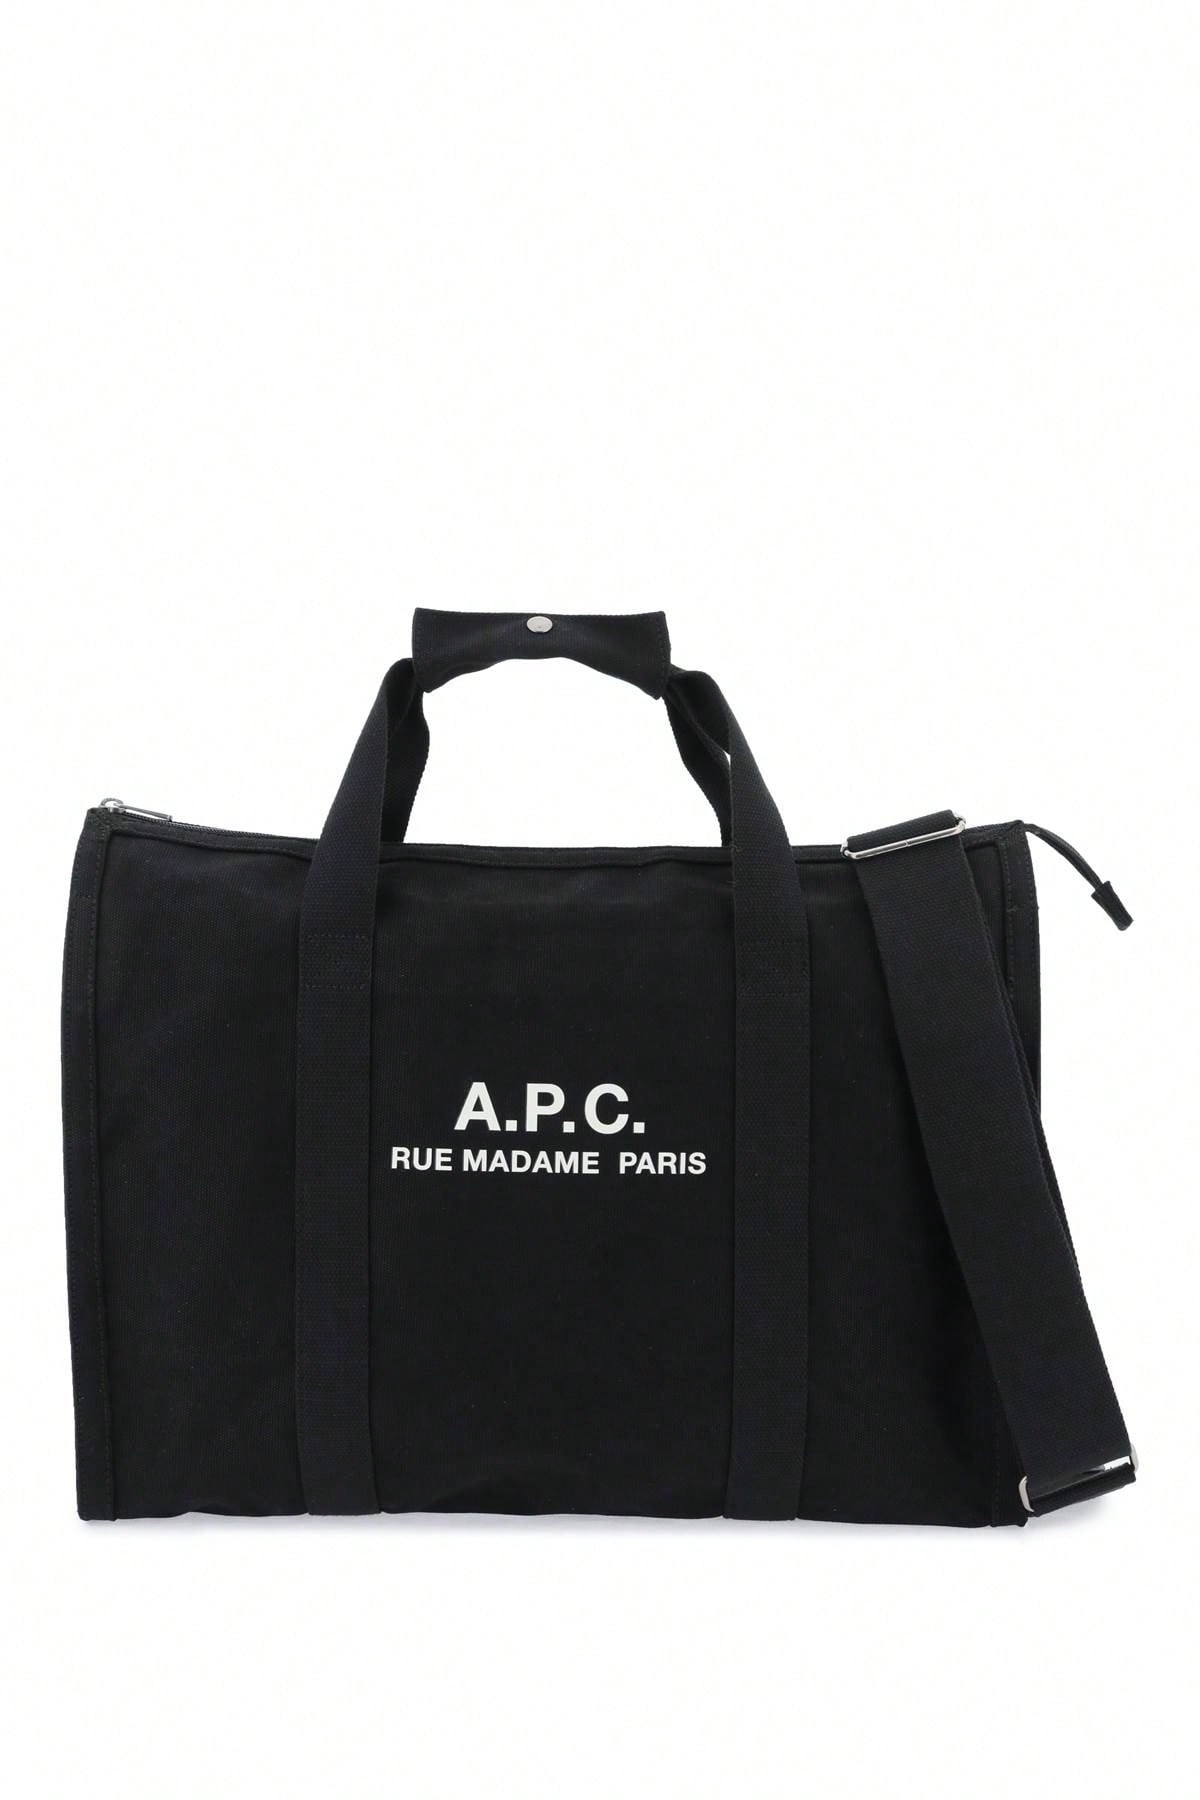 А.П.К. Большая сумка-тоут Récupération, черный summer female bag 2020 new wave texture niche tote bag wild shoulder portable crossbody bag